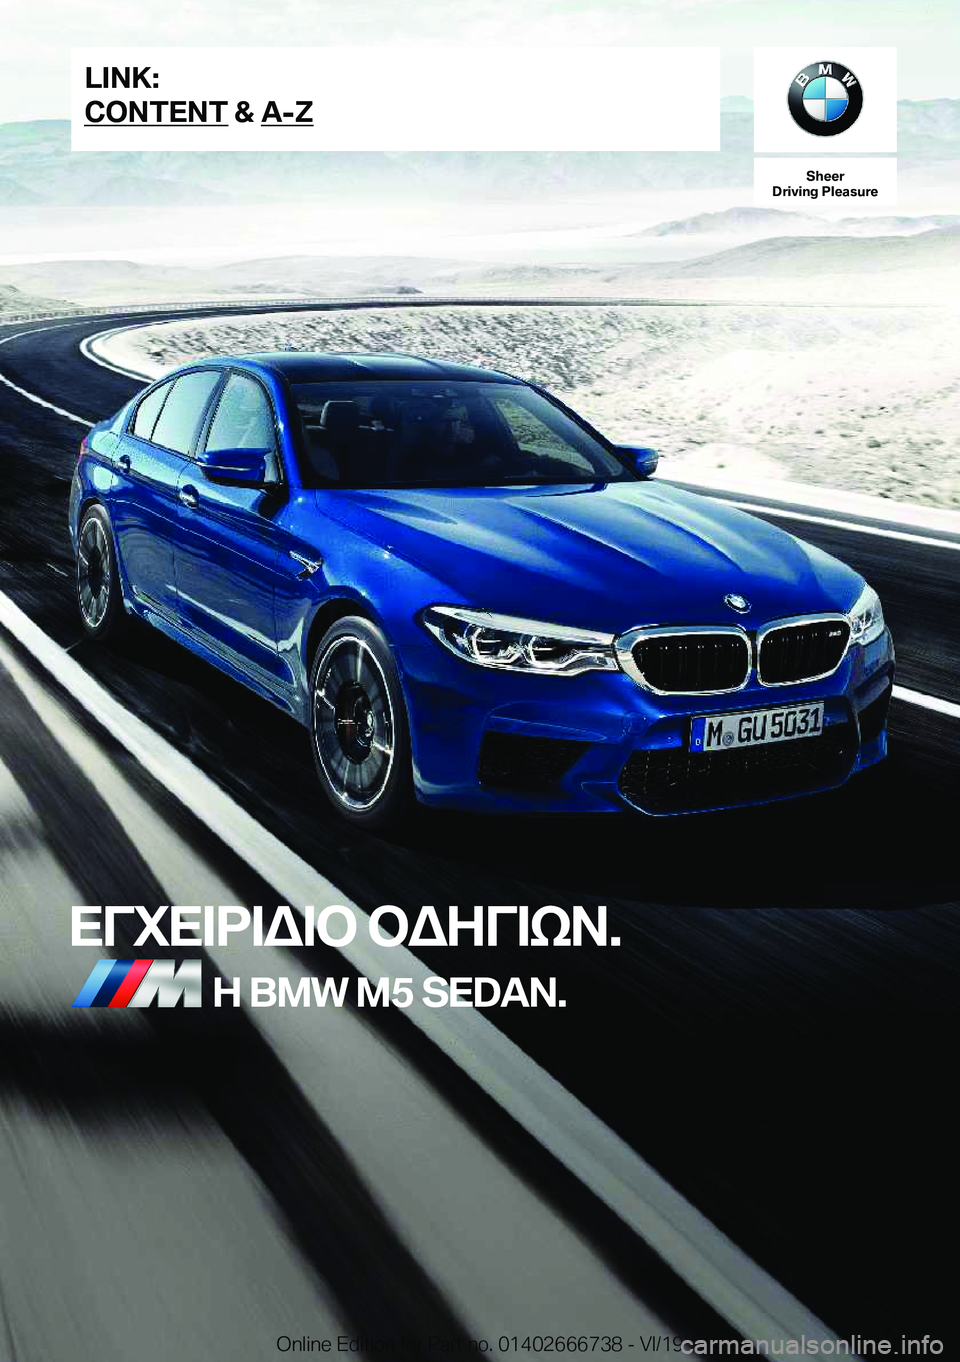 BMW M5 2020  ΟΔΗΓΌΣ ΧΡΉΣΗΣ (in Greek) �S�h�e�e�r
�D�r�i�v�i�n�g��P�l�e�a�s�u�r�e
XViX=d=W=b�bWZV=kA�.Z��B�M�W��M�5��S�E�D�A�N�.�L�I�N�K�:
�C�O�N�T�E�N�T��&��A�-�Z�O�n�l�i�n�e��E�d�i�t�i�o�n��f�o�r��P�a�r�t��n�